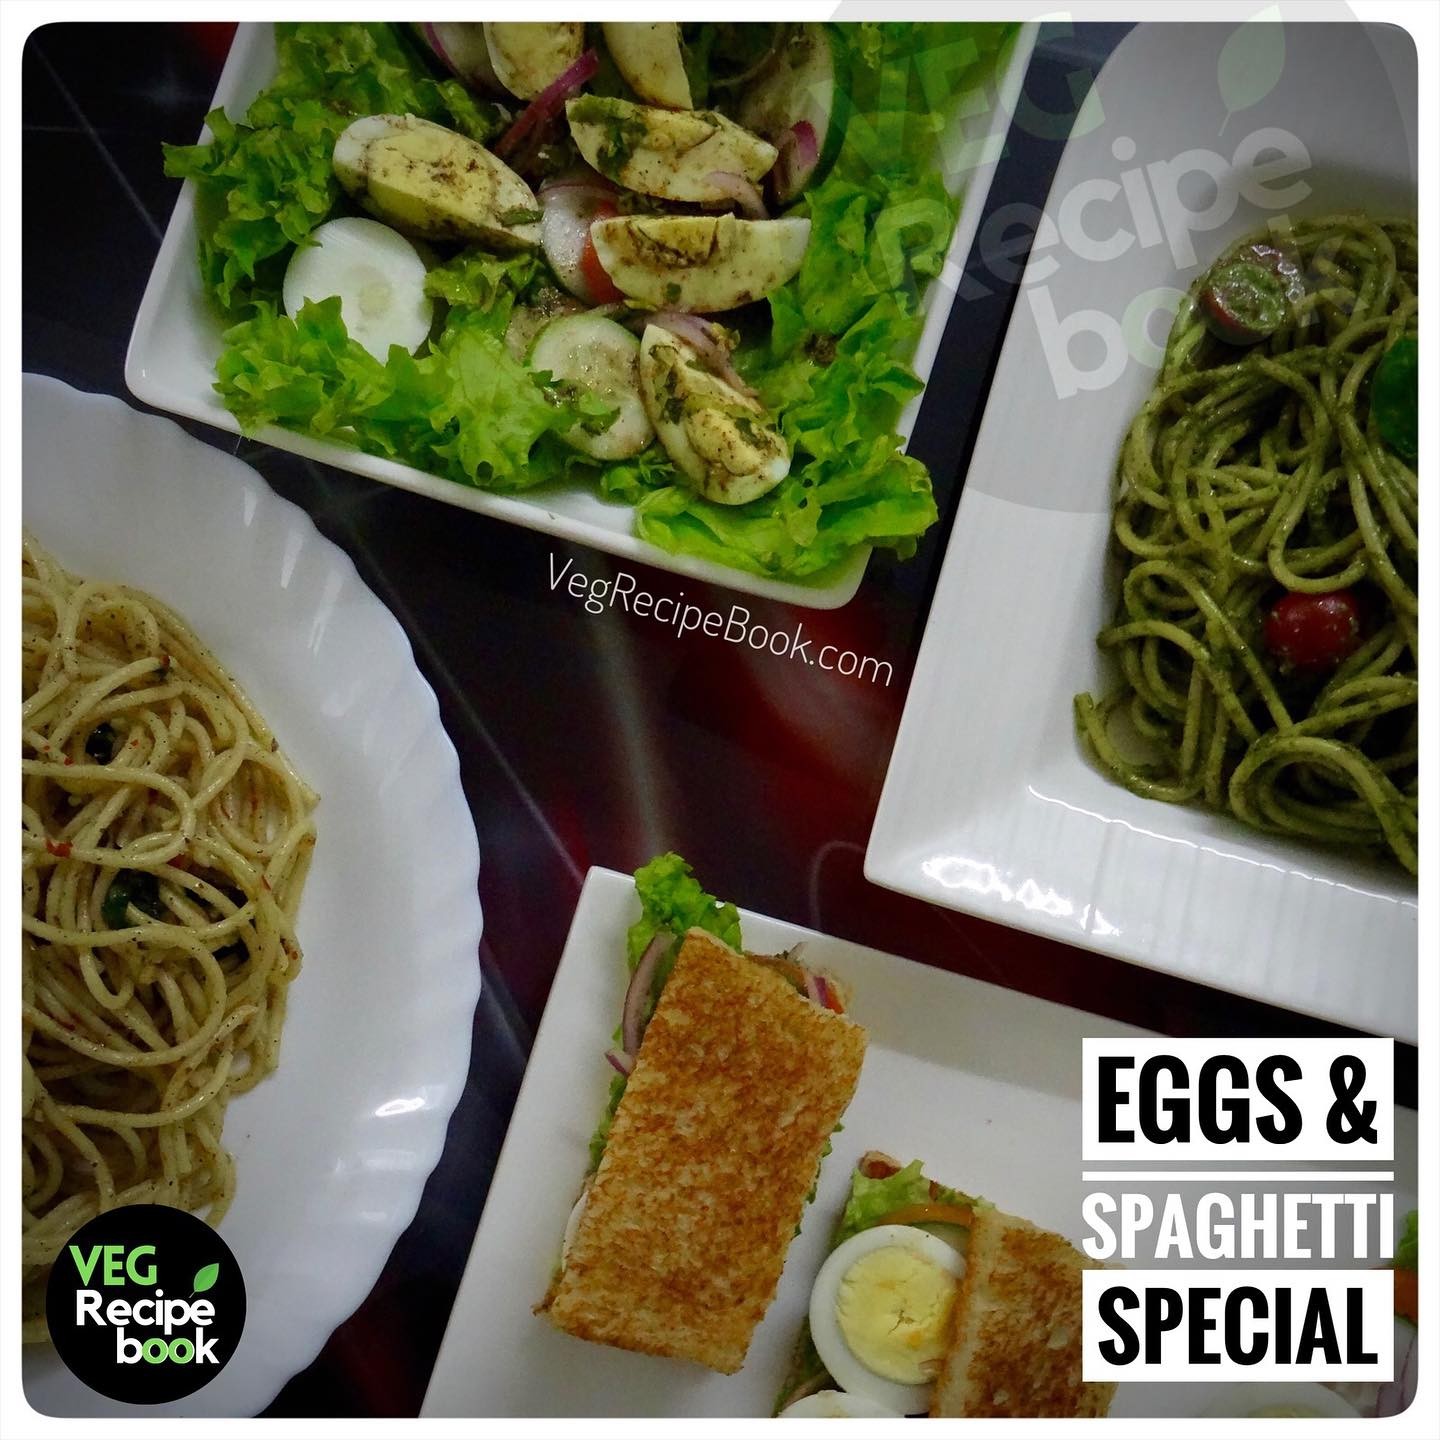 Today's special ~ Pastas, Egg Sandwich & Salad.
.
.
follow me @thevegrecipebook .
.
.
.
#spaghetti #pasta #eggsandwich #salad #vegrecipebook #itsmegrd #garuskitchen #lettuce #boiledeggs #basilpestopasta #garlicspaghetti #lettuceandeggs #foodblogger #foodbloggers #foodblogfeed #foodporn #foodphotography #foodgasm #foodstagram #instafood #foodography #healthyfood #foodstyling #foodpic #foodartchefs #foodoftheday #foodtalkindia #italianfood #salads #foodpics